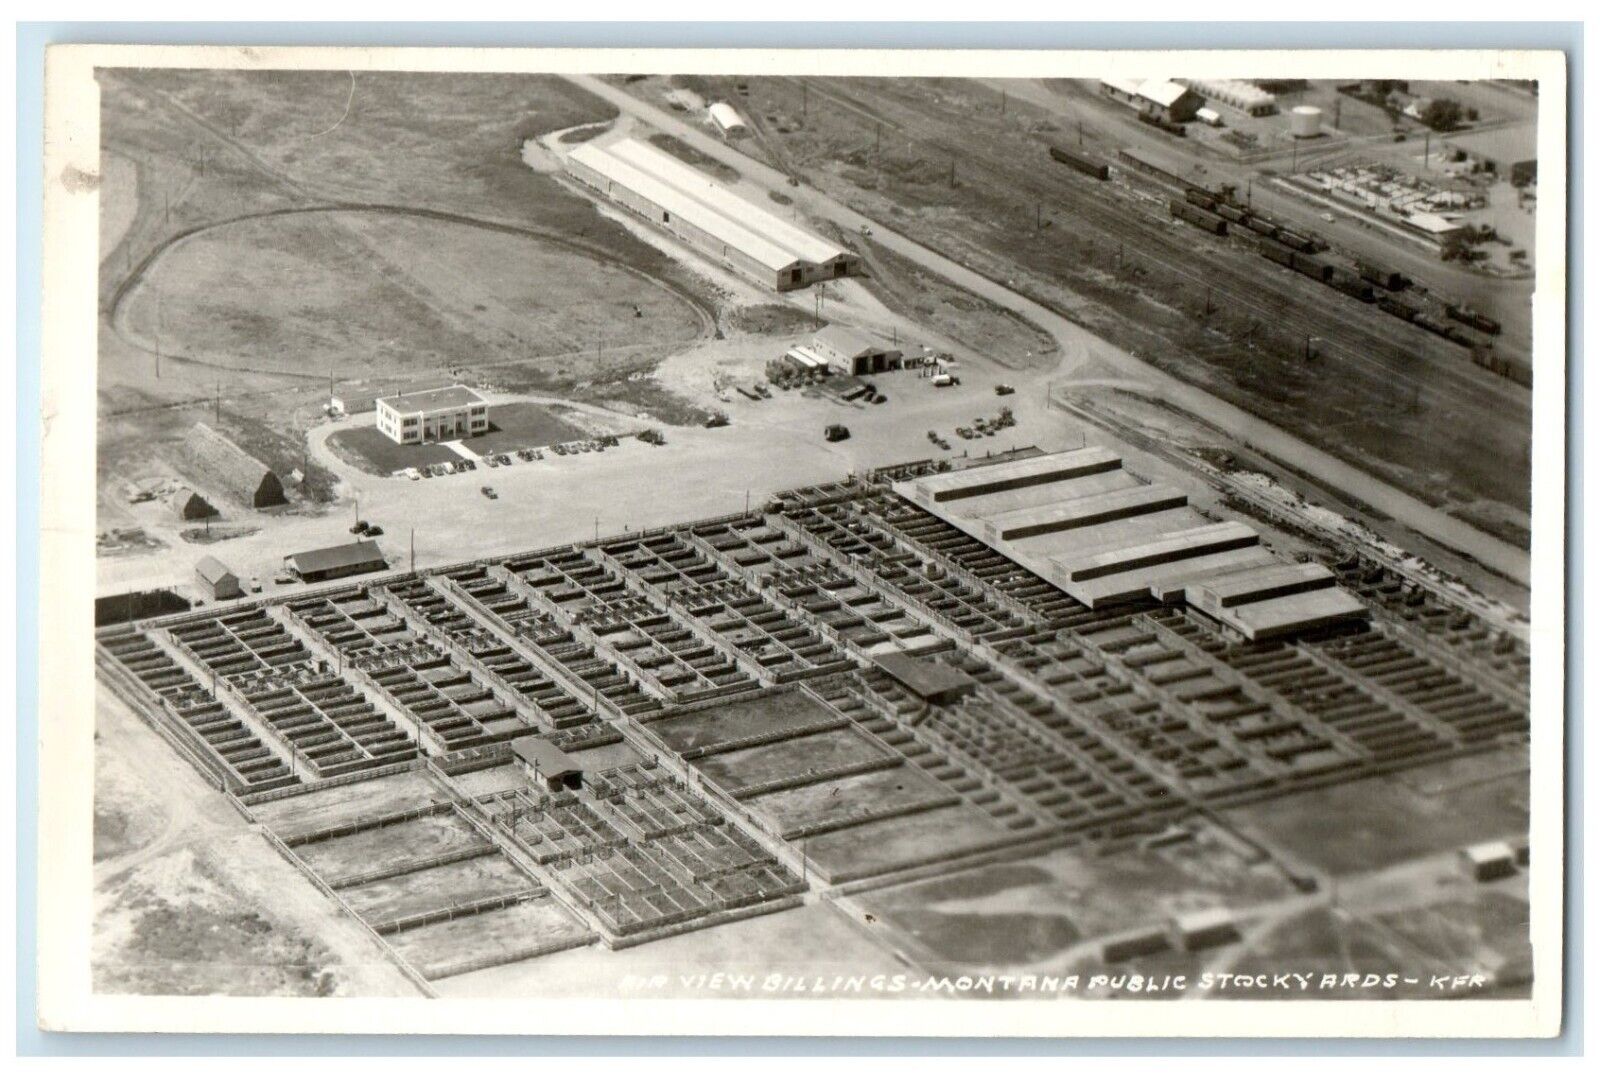 c1940\'s Air View Billings Montana Public Stockyards RPPC Photo Vintage Postcard